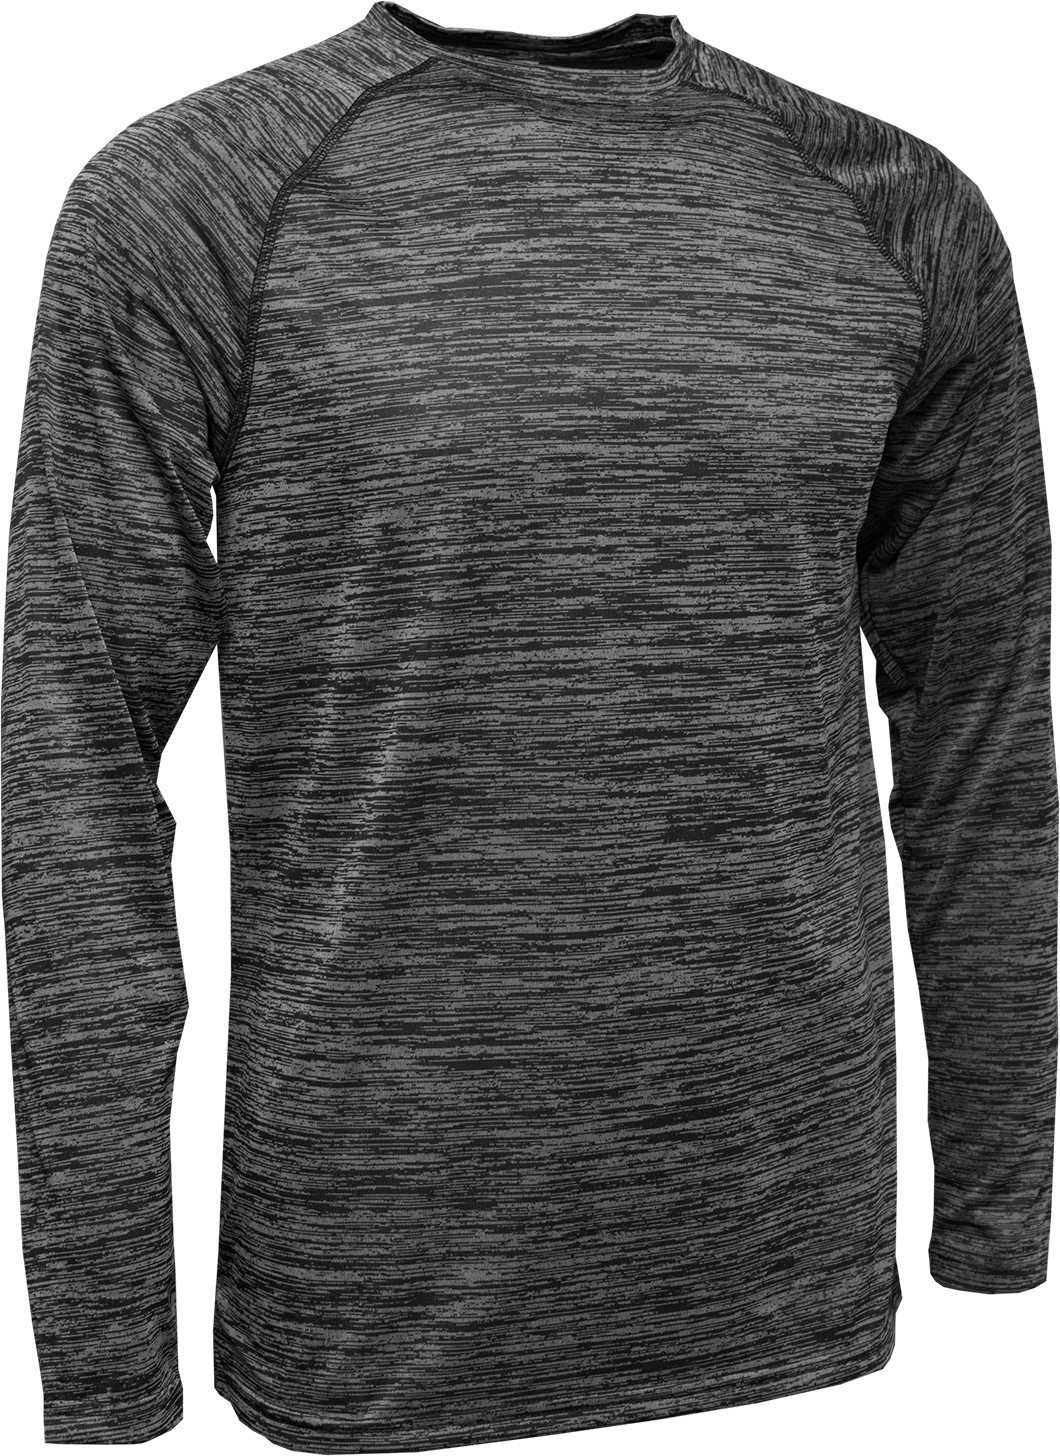 BAW Athletic Wear DT86 - Men's Dry-Tek Long Sleeve Shirt